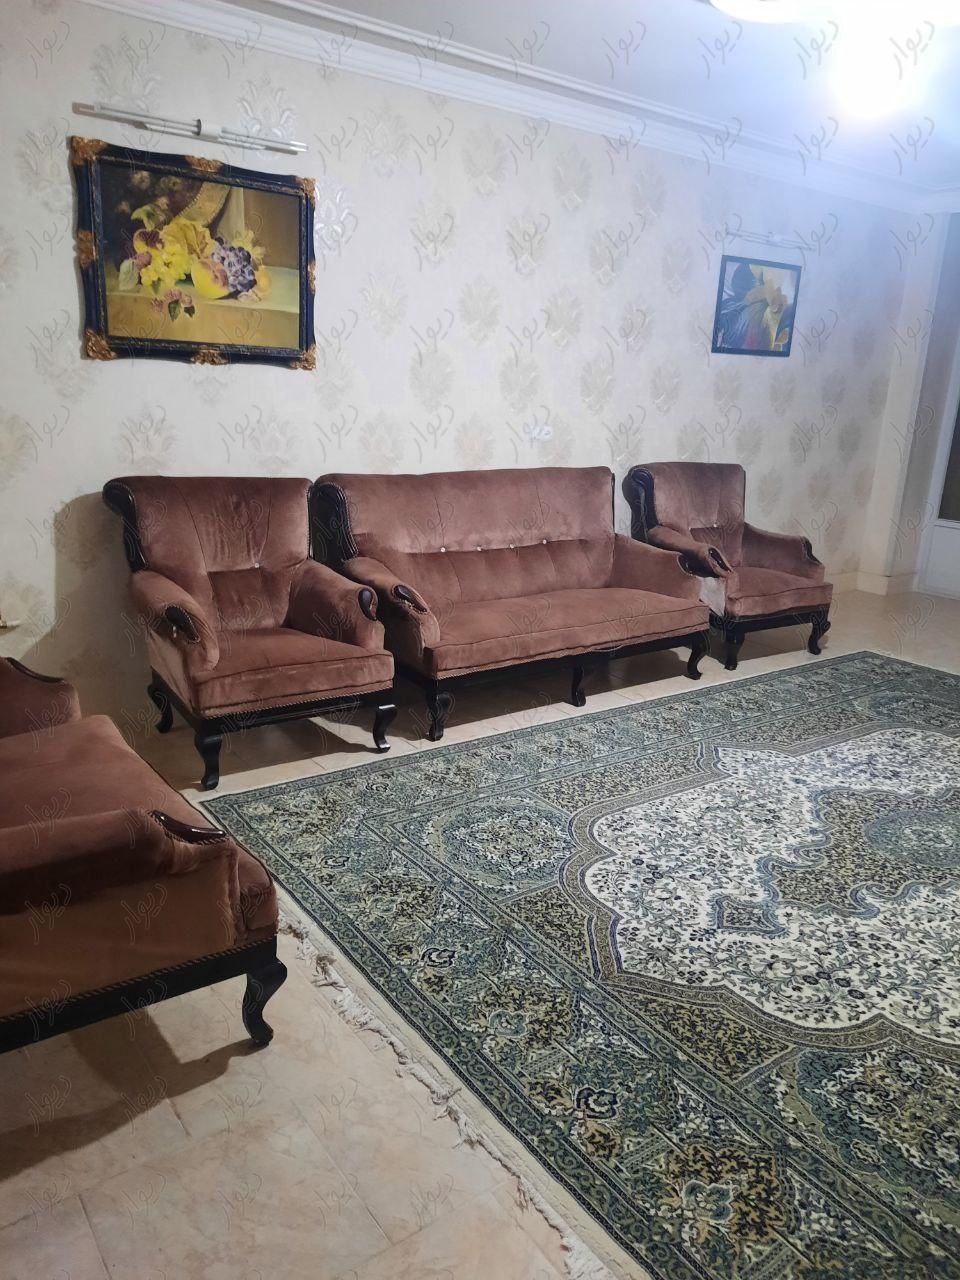 مبله مسافری |اجارهٔ کوتاه مدت آپارتمان و سوئیت|اصفهان, احمدآباد|دیوار